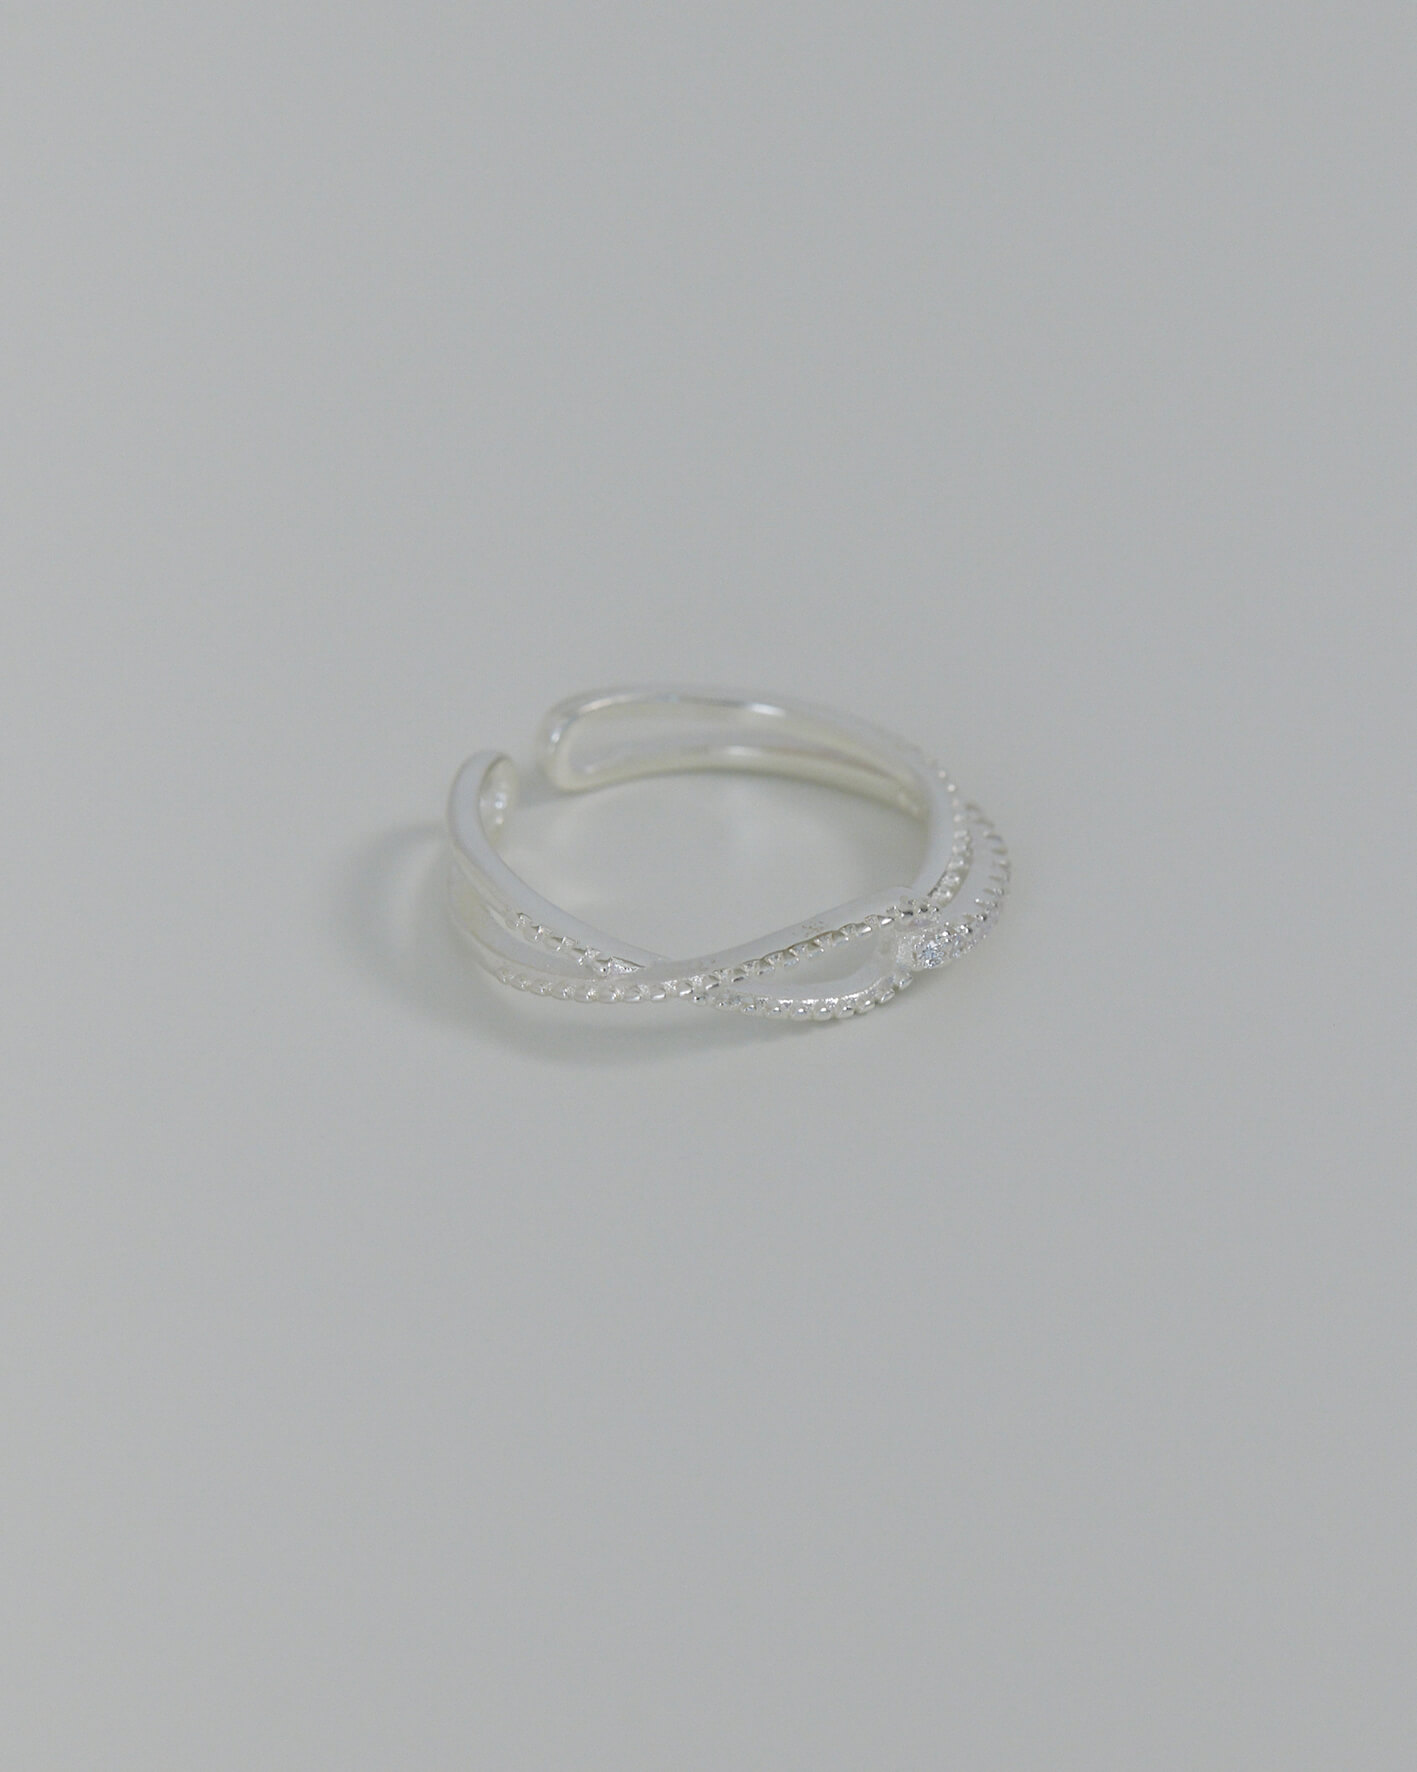 Eco安珂,韓國飾品,韓國戒指,韓國925純銀戒指,925純銀戒指,純銀戒指,活圍戒